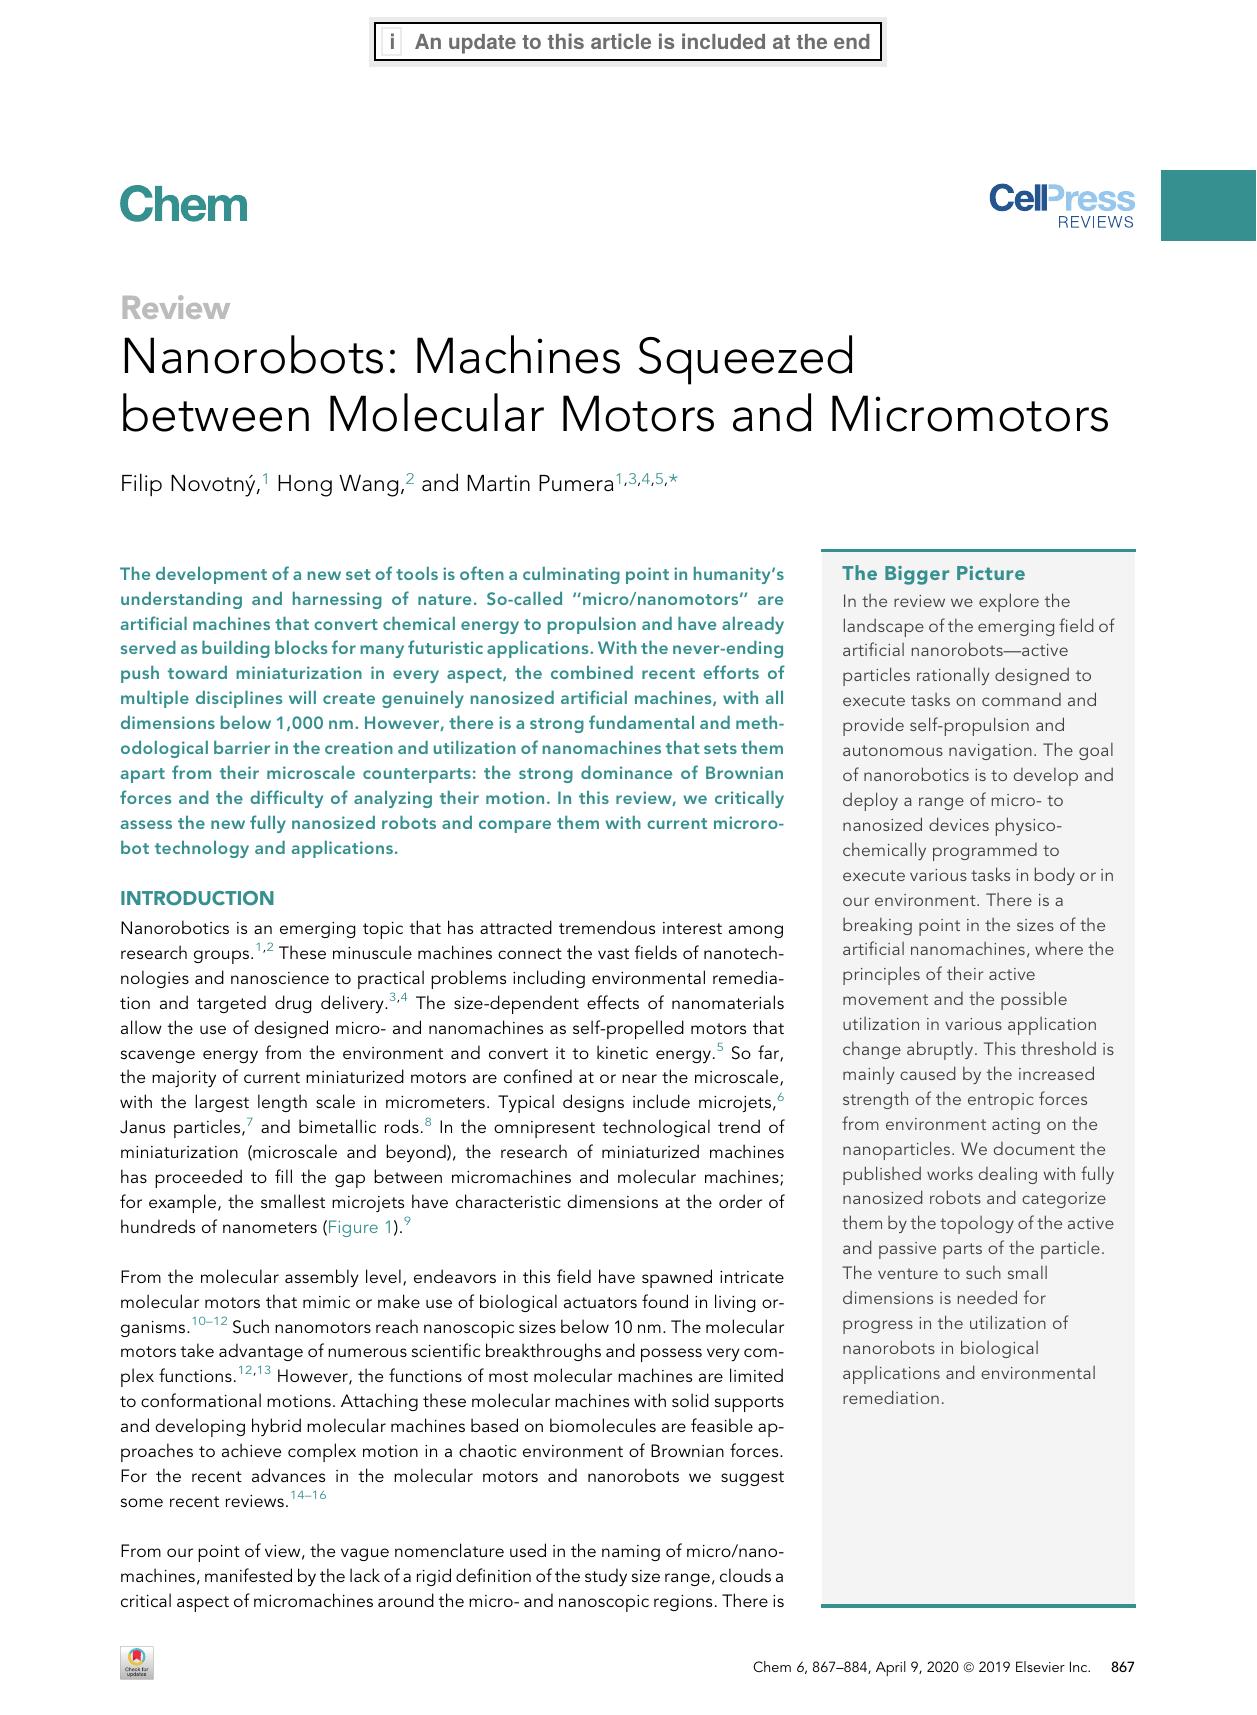 Nanorobots: Machines Squeezed between Molecular Motors and Micromotors by Filip Novotný & Hong Wang & Martin Pumera